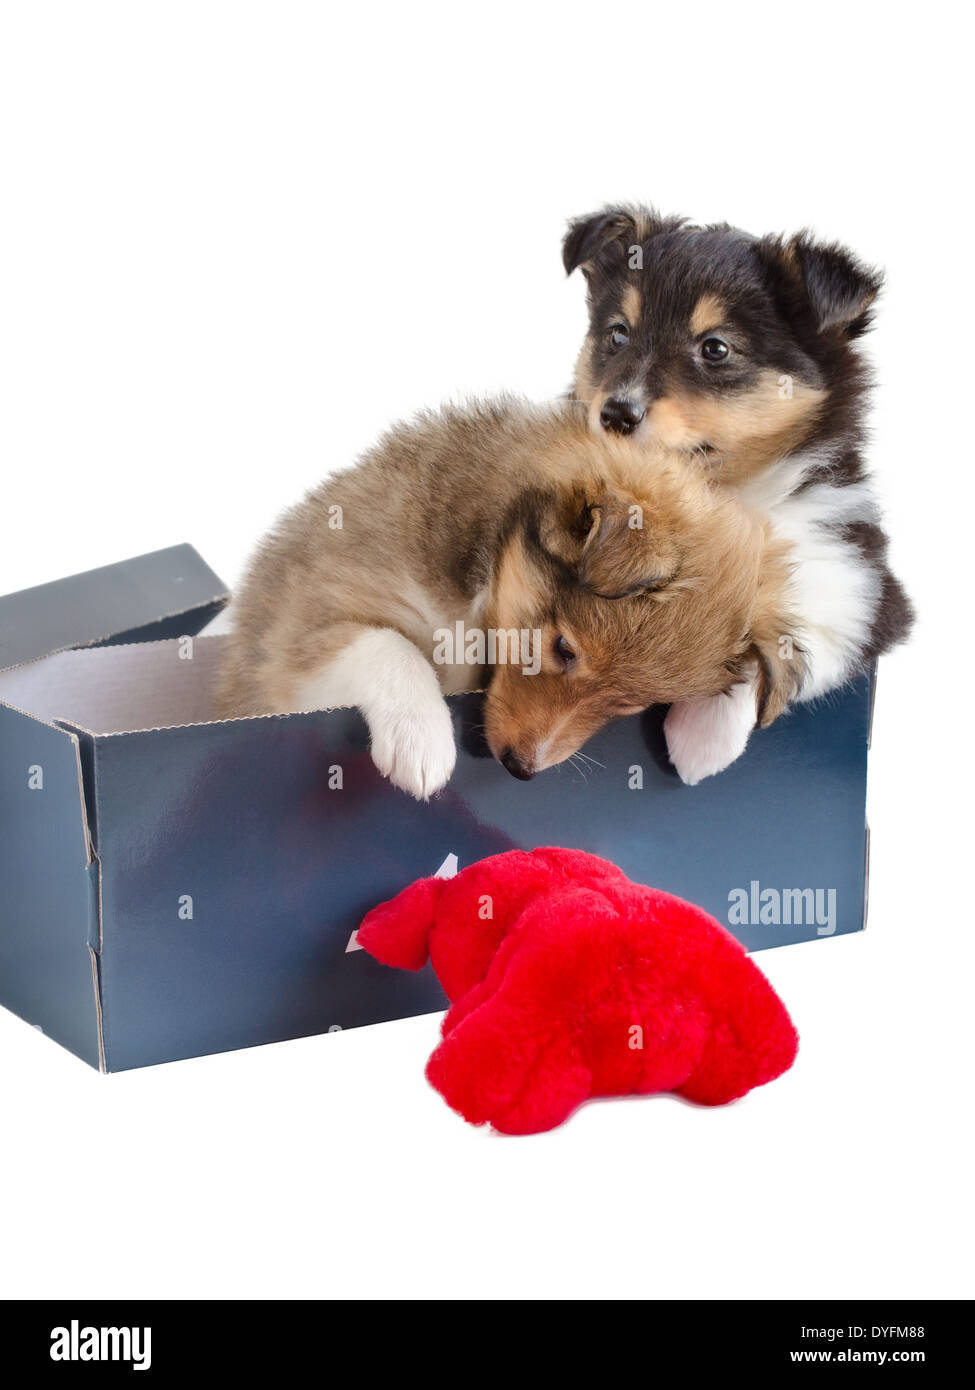 https://c8.alamy.com/comp/DYFM88/two-little-sheltie-puppy-in-a-gift-box-DYFM88.jpg